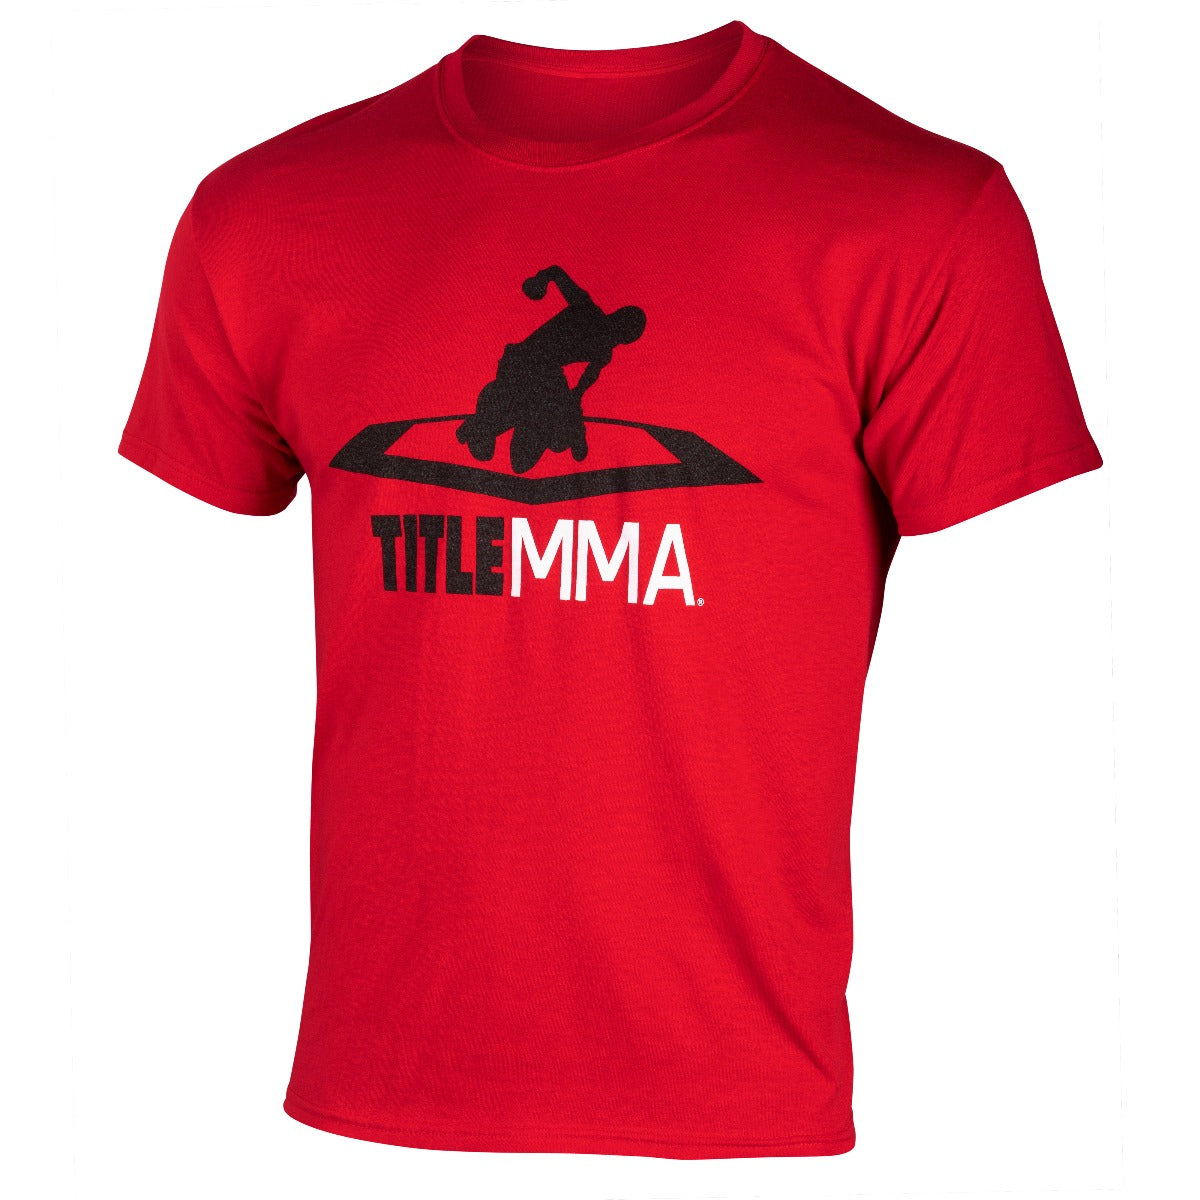 TITLE MMA Beat Down Tee